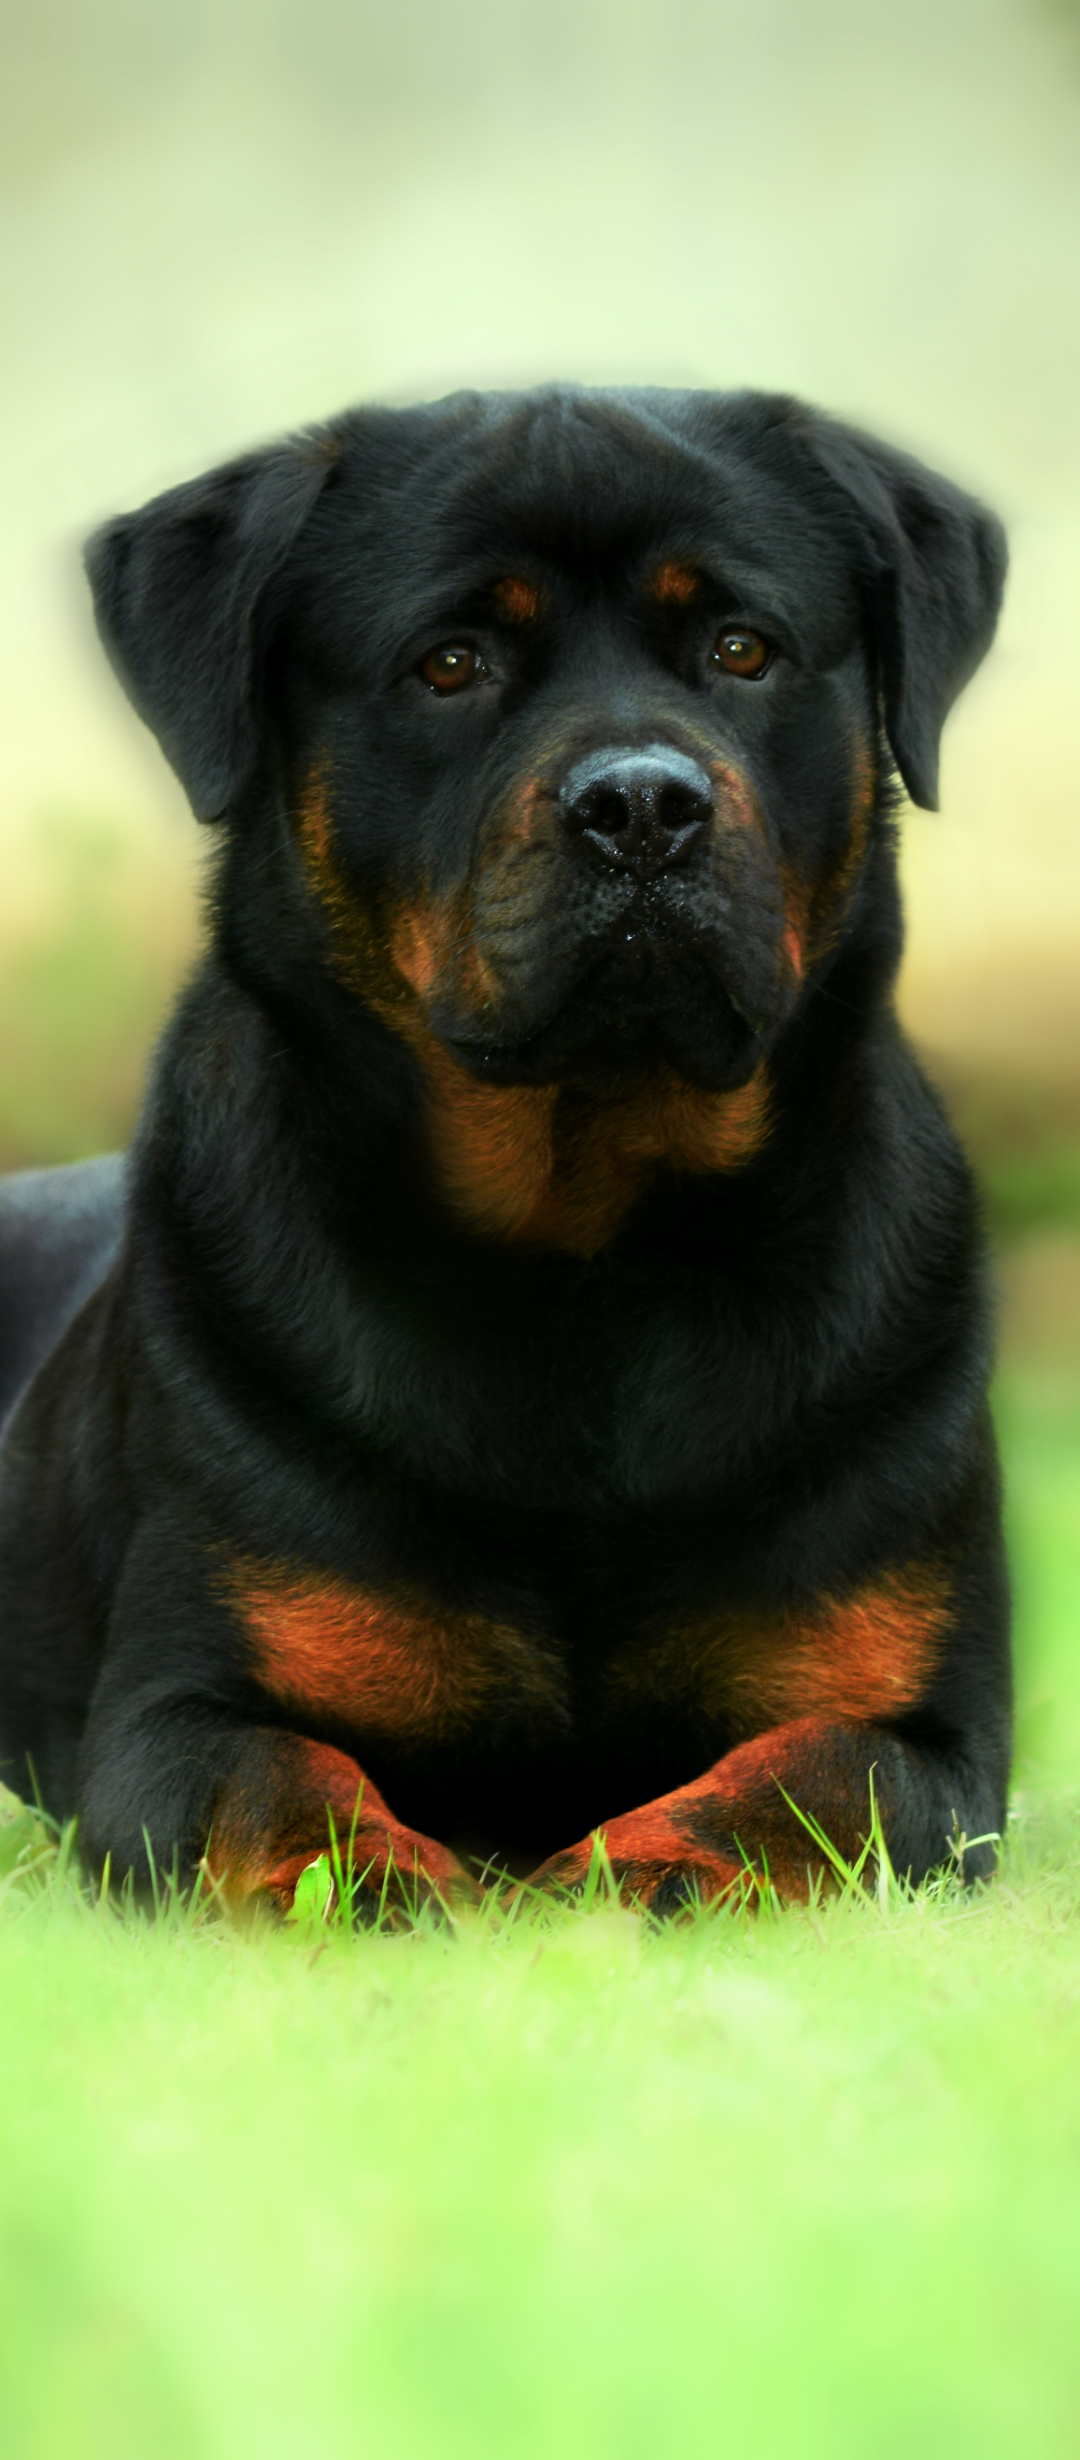 My Rottweiler - Cute Dog & Puppy Wallpapers -  fddpppmgolbpchpdahkiglcnflmgkomn - Extpose